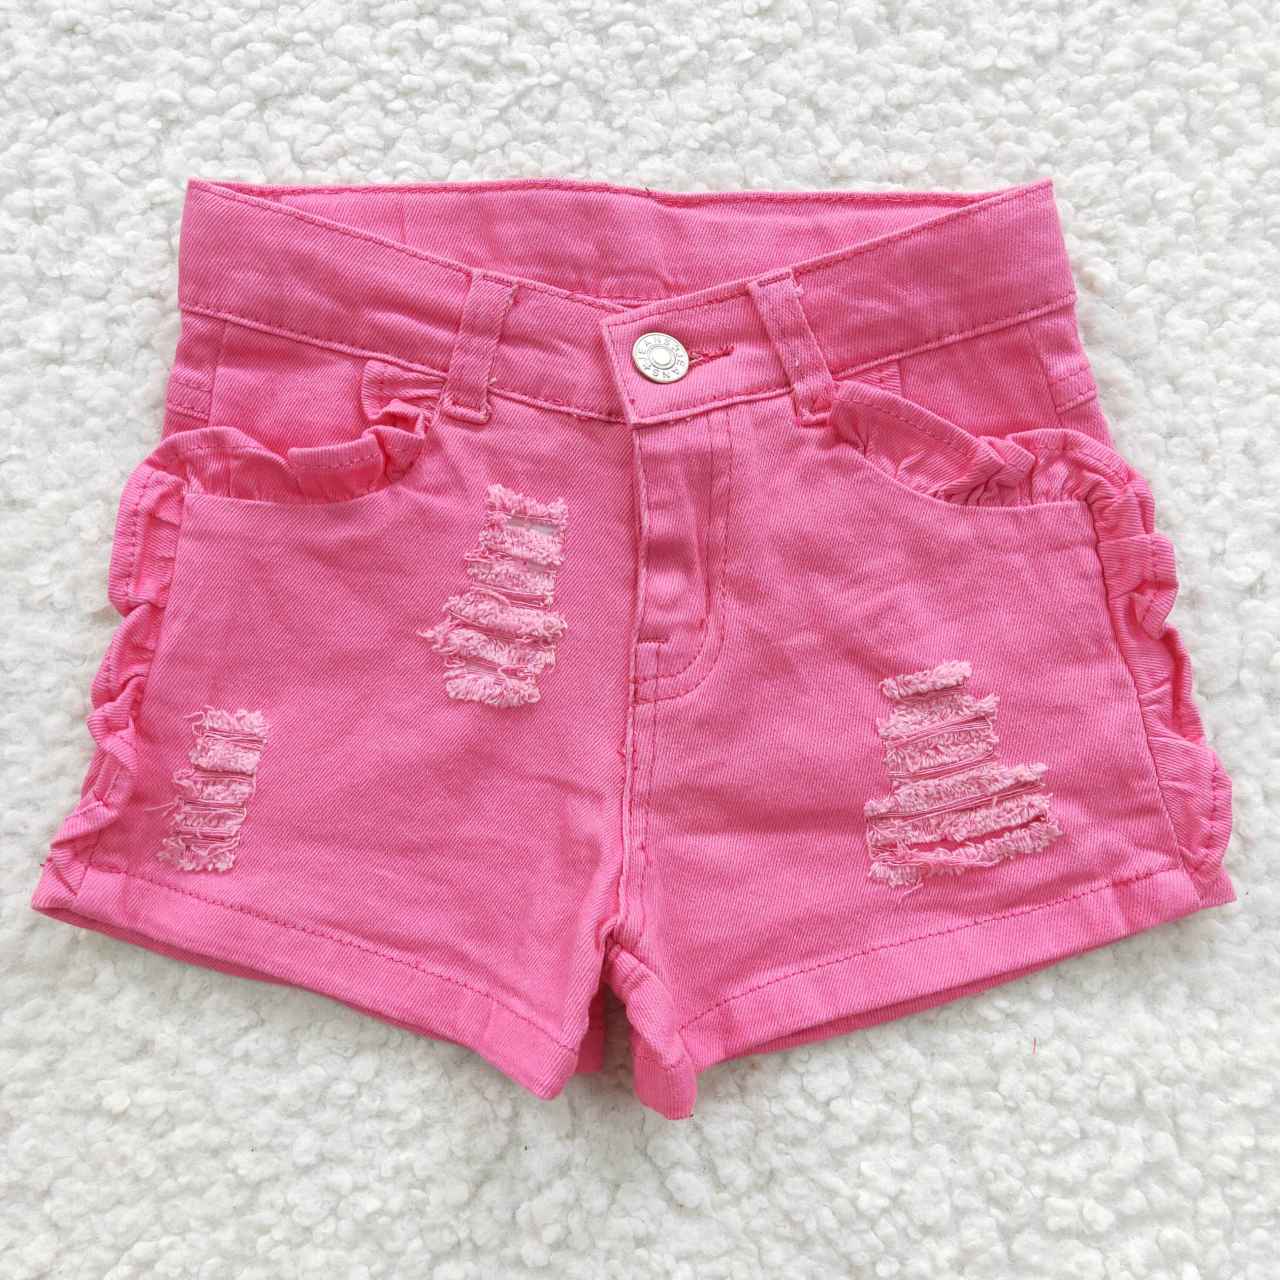 SS0013 girl clothes summer hot pink denim shorts